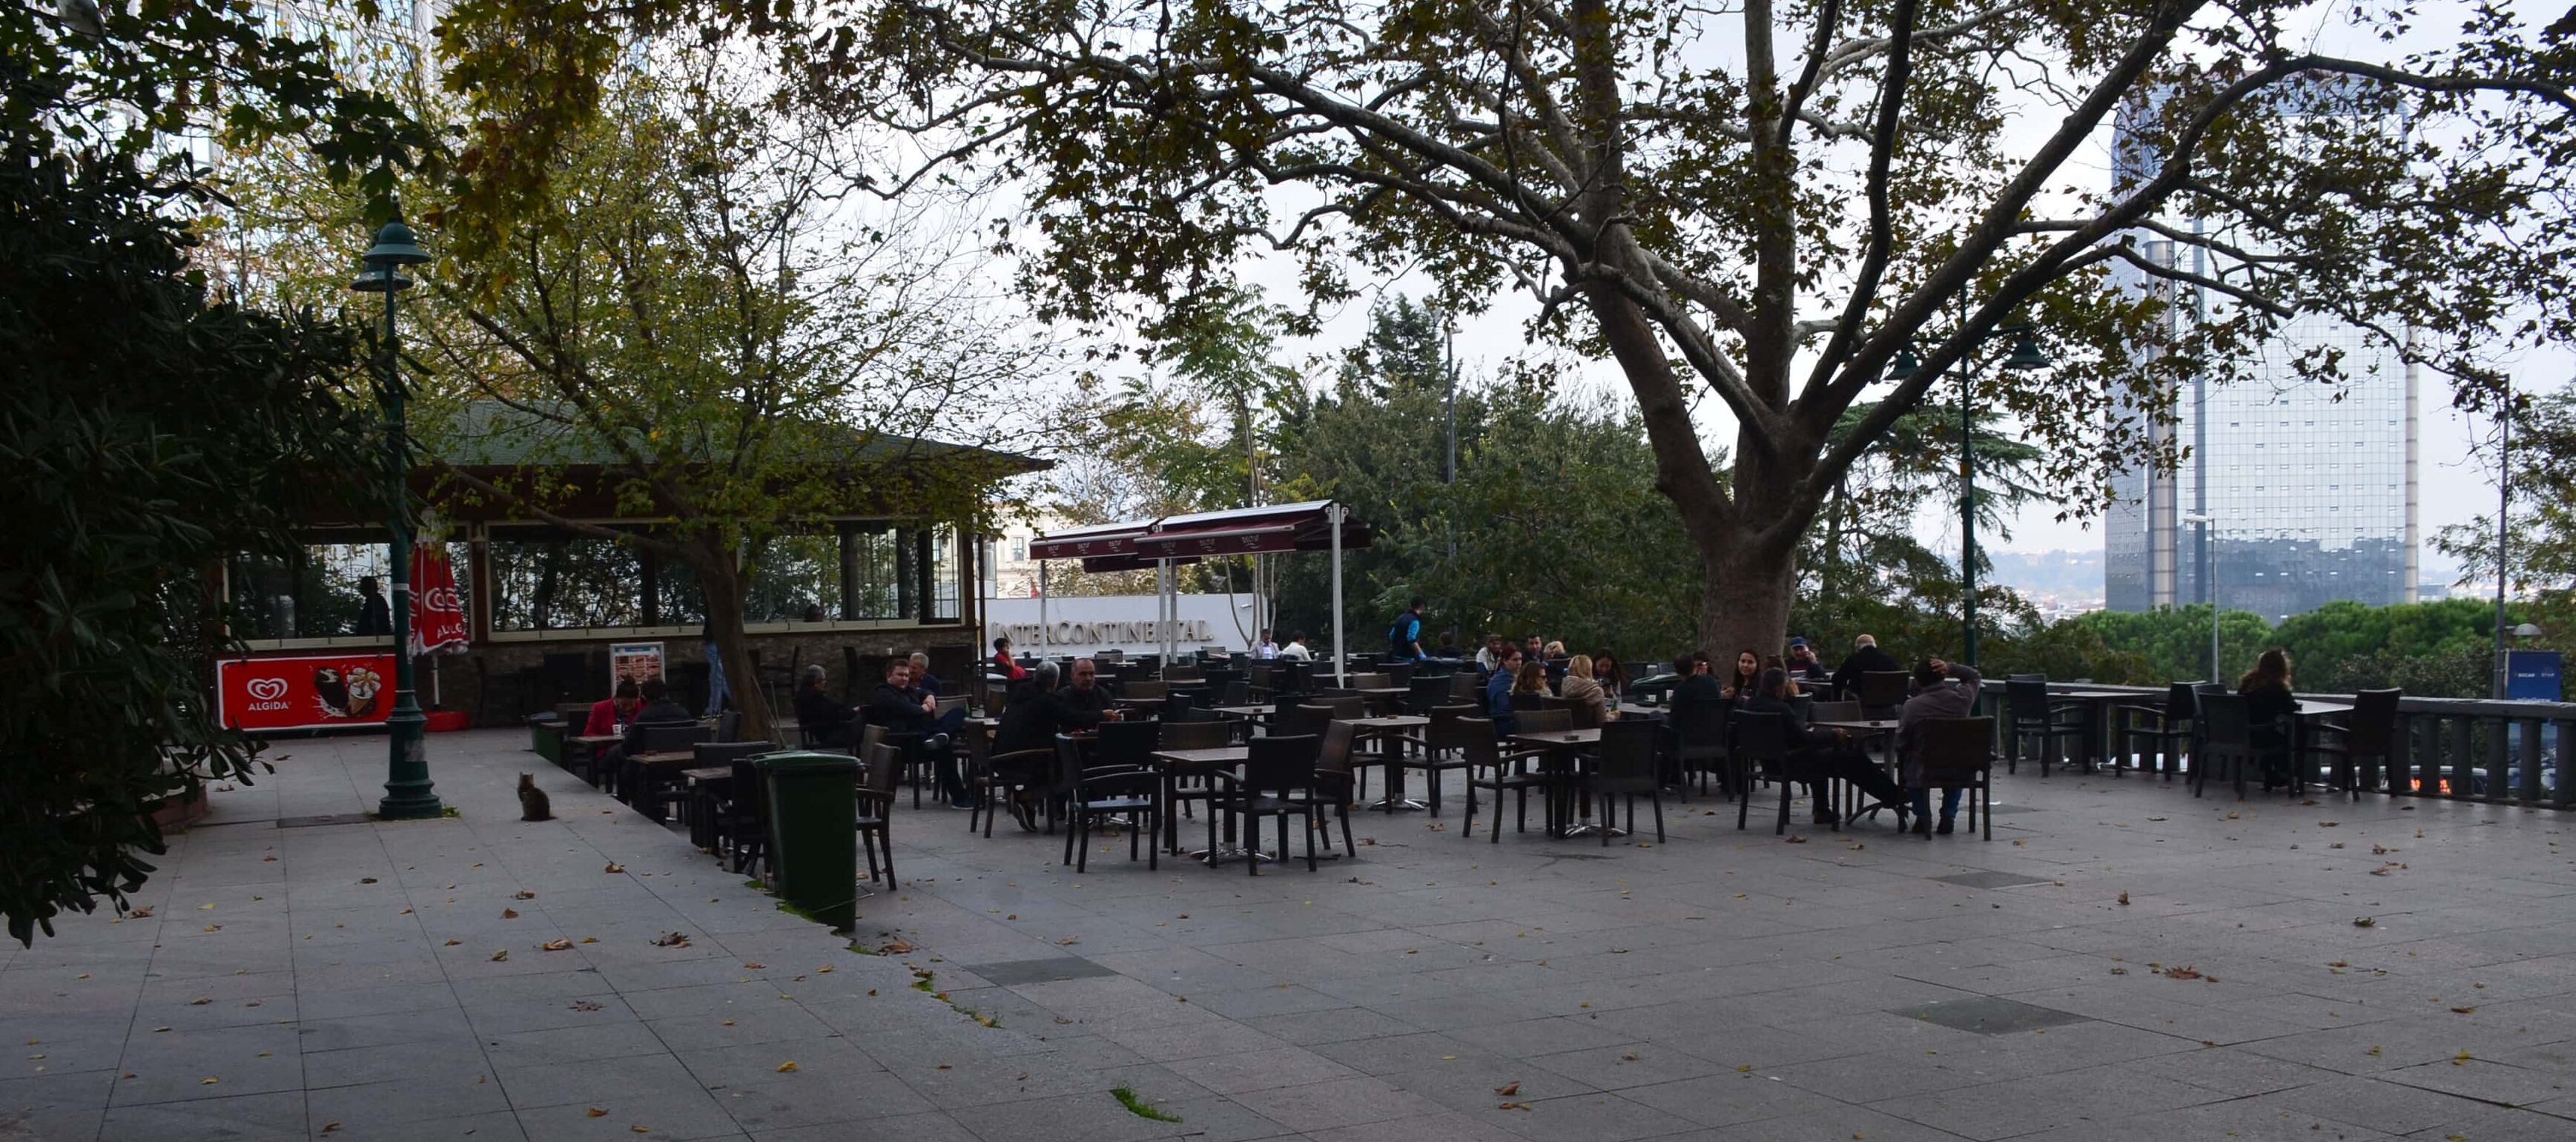 Tea garden at Gezi Park